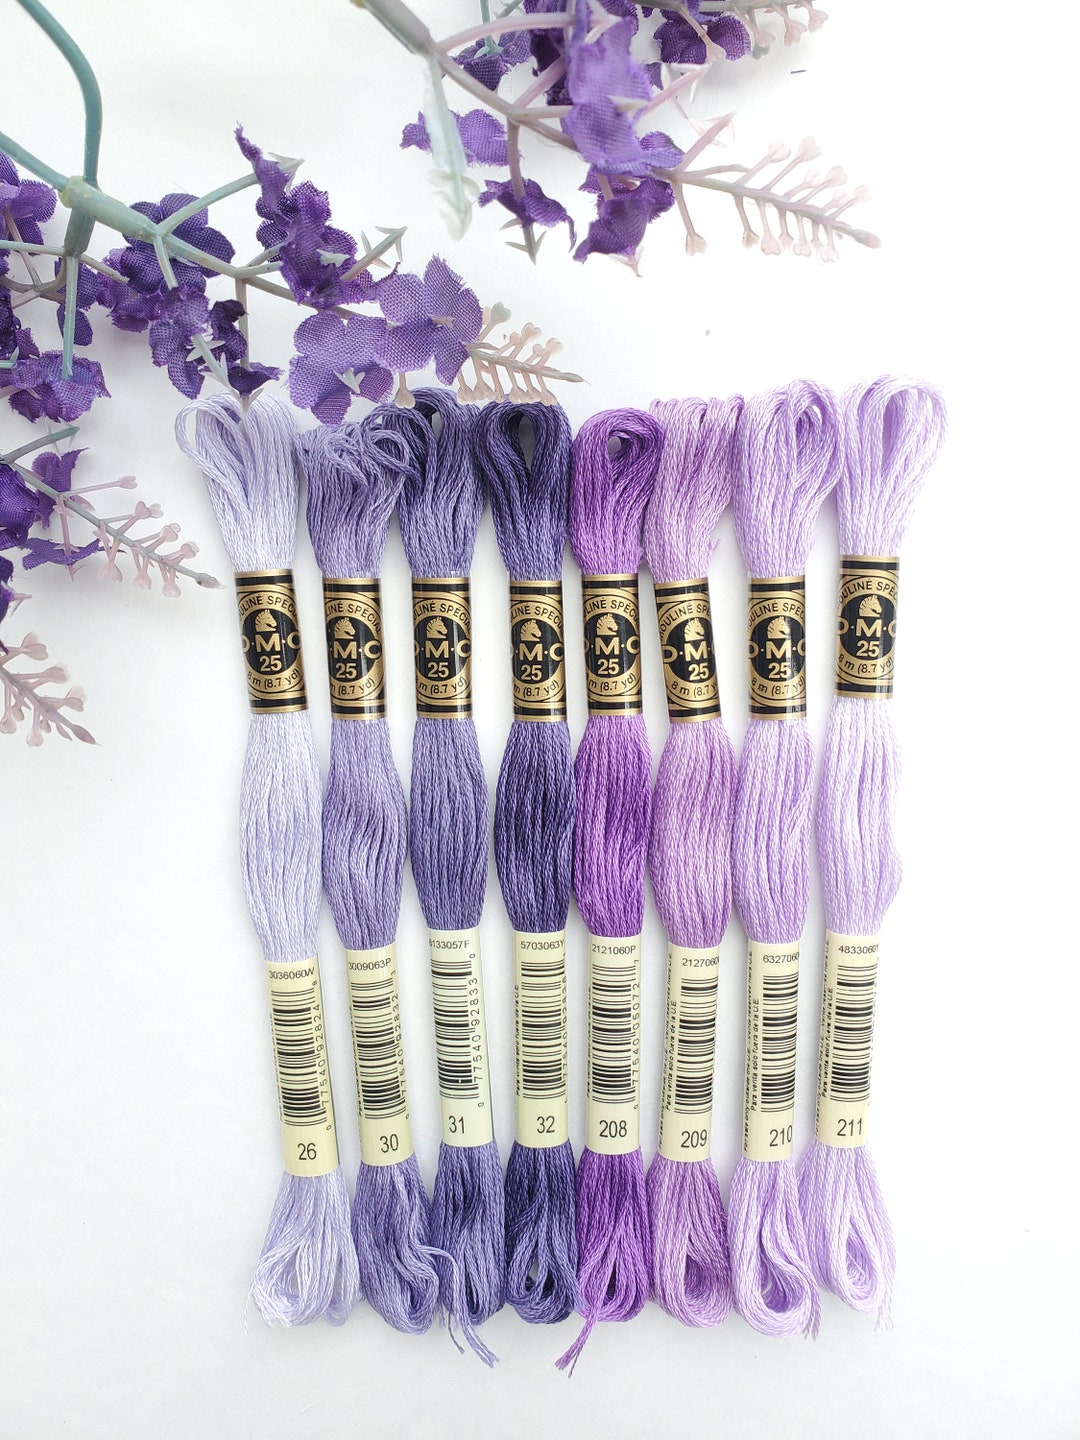 8x Purple DMC Flosses, Dmc Threads, DMC Kit, Dmc Set of Colors, Dmc Cotton  Floss, Dmc Embroidery Floss, Purple Threads, Cross Stitch Floss - Etsy